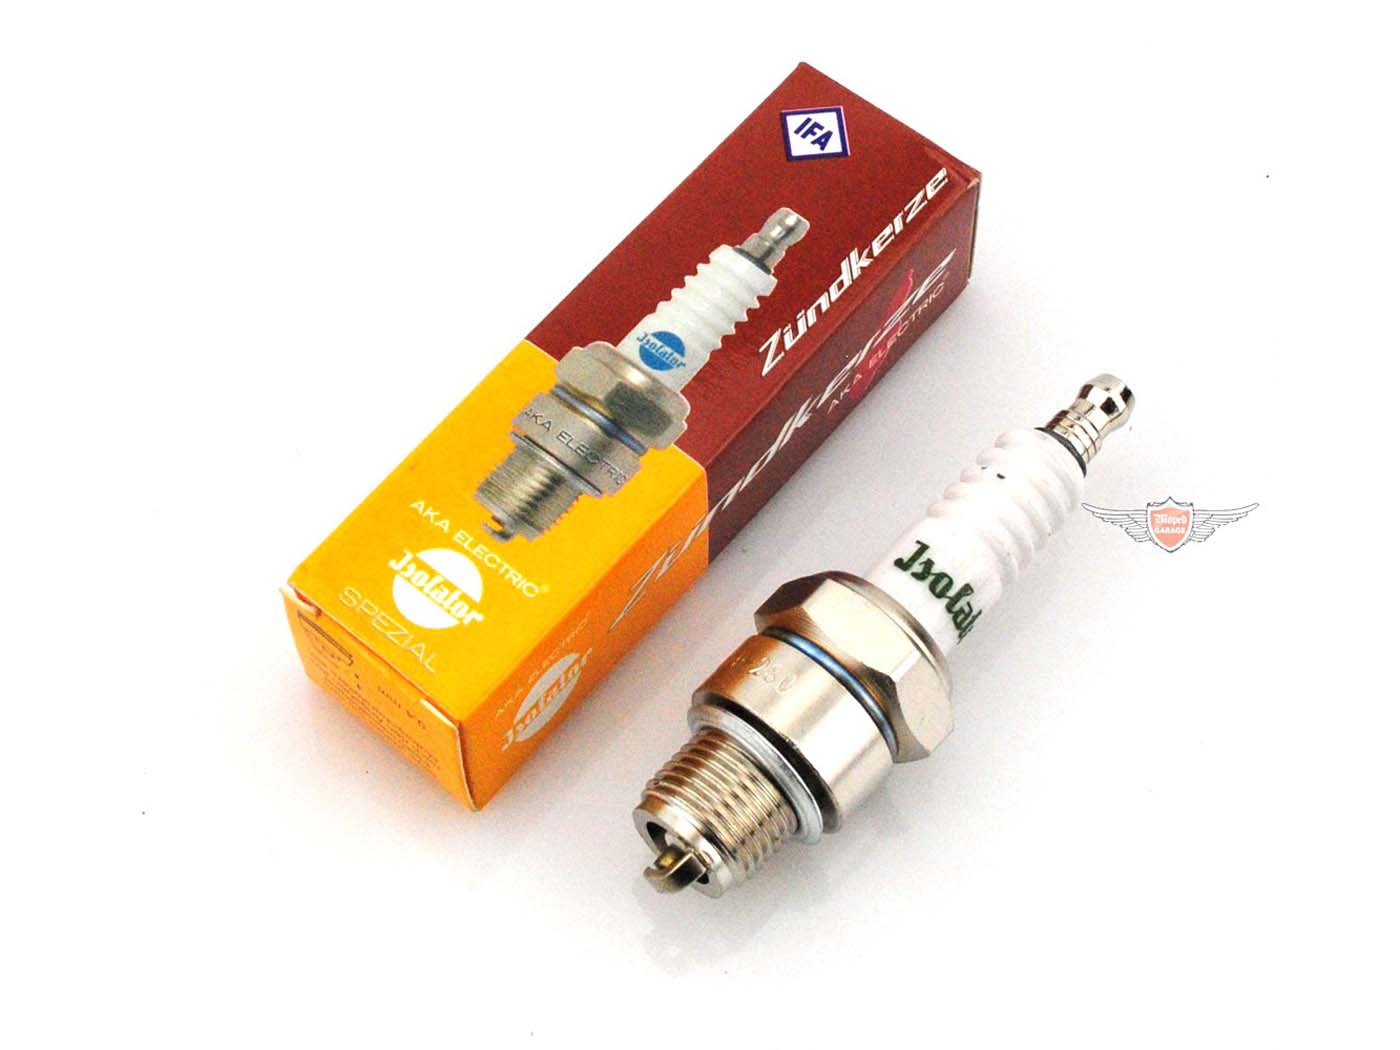 Insulator Spark Plug Electrode Gap 0.4 Mm For S50, S51, S70, S53, SR50, SR80, KR51/1, KR51/2, SR4-2, SR4-3, SR4-4, SR1, SR2, SR2E, MZ ES, ETS, TS, ETZ, RT125/1, RT125/2, RT125/3